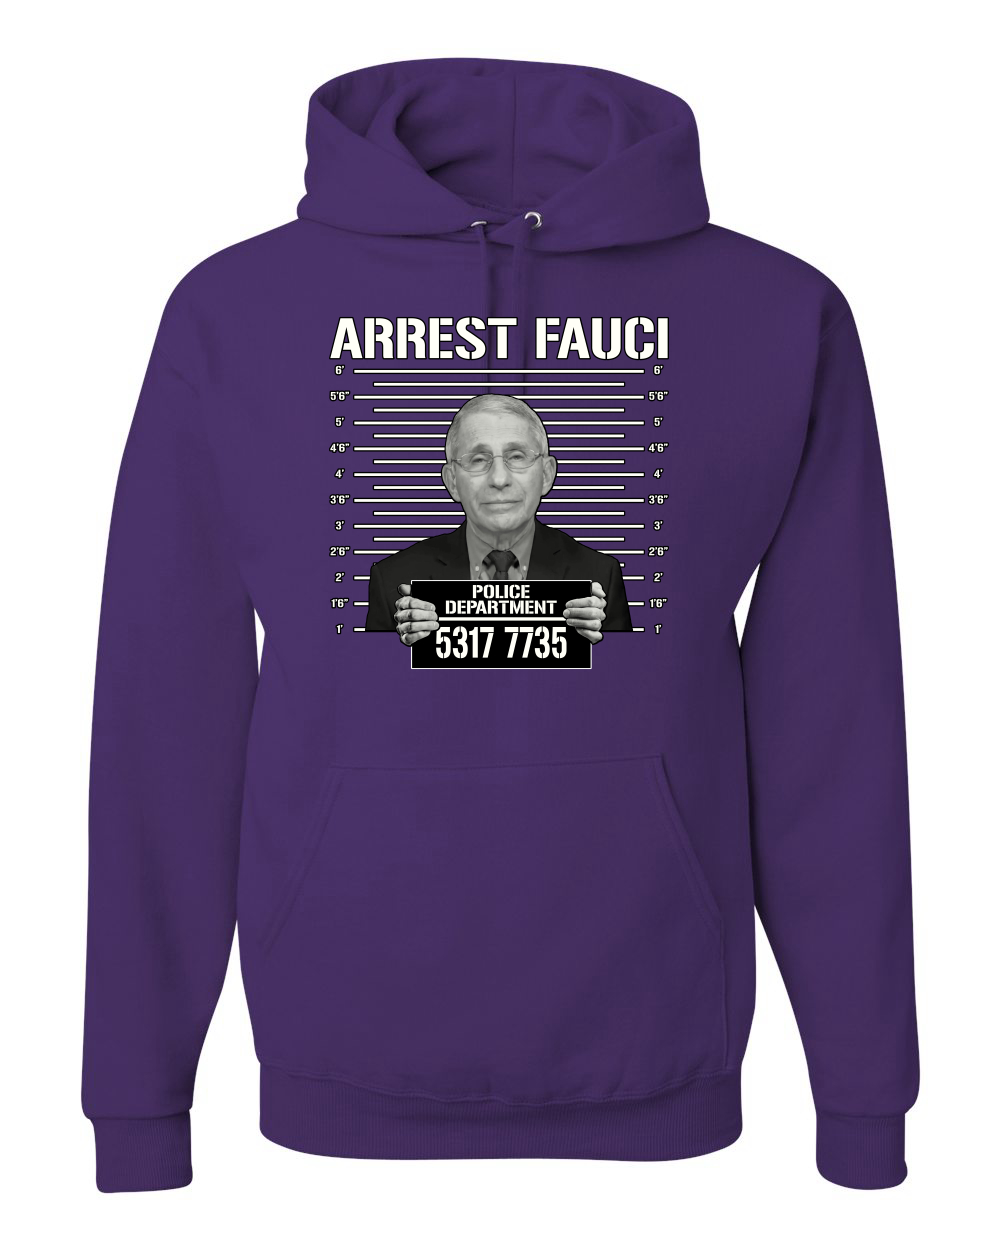 thumbnail 14  - Arrest Fauci Mugshot Political Unisex Graphic Hooded Sweatshirt